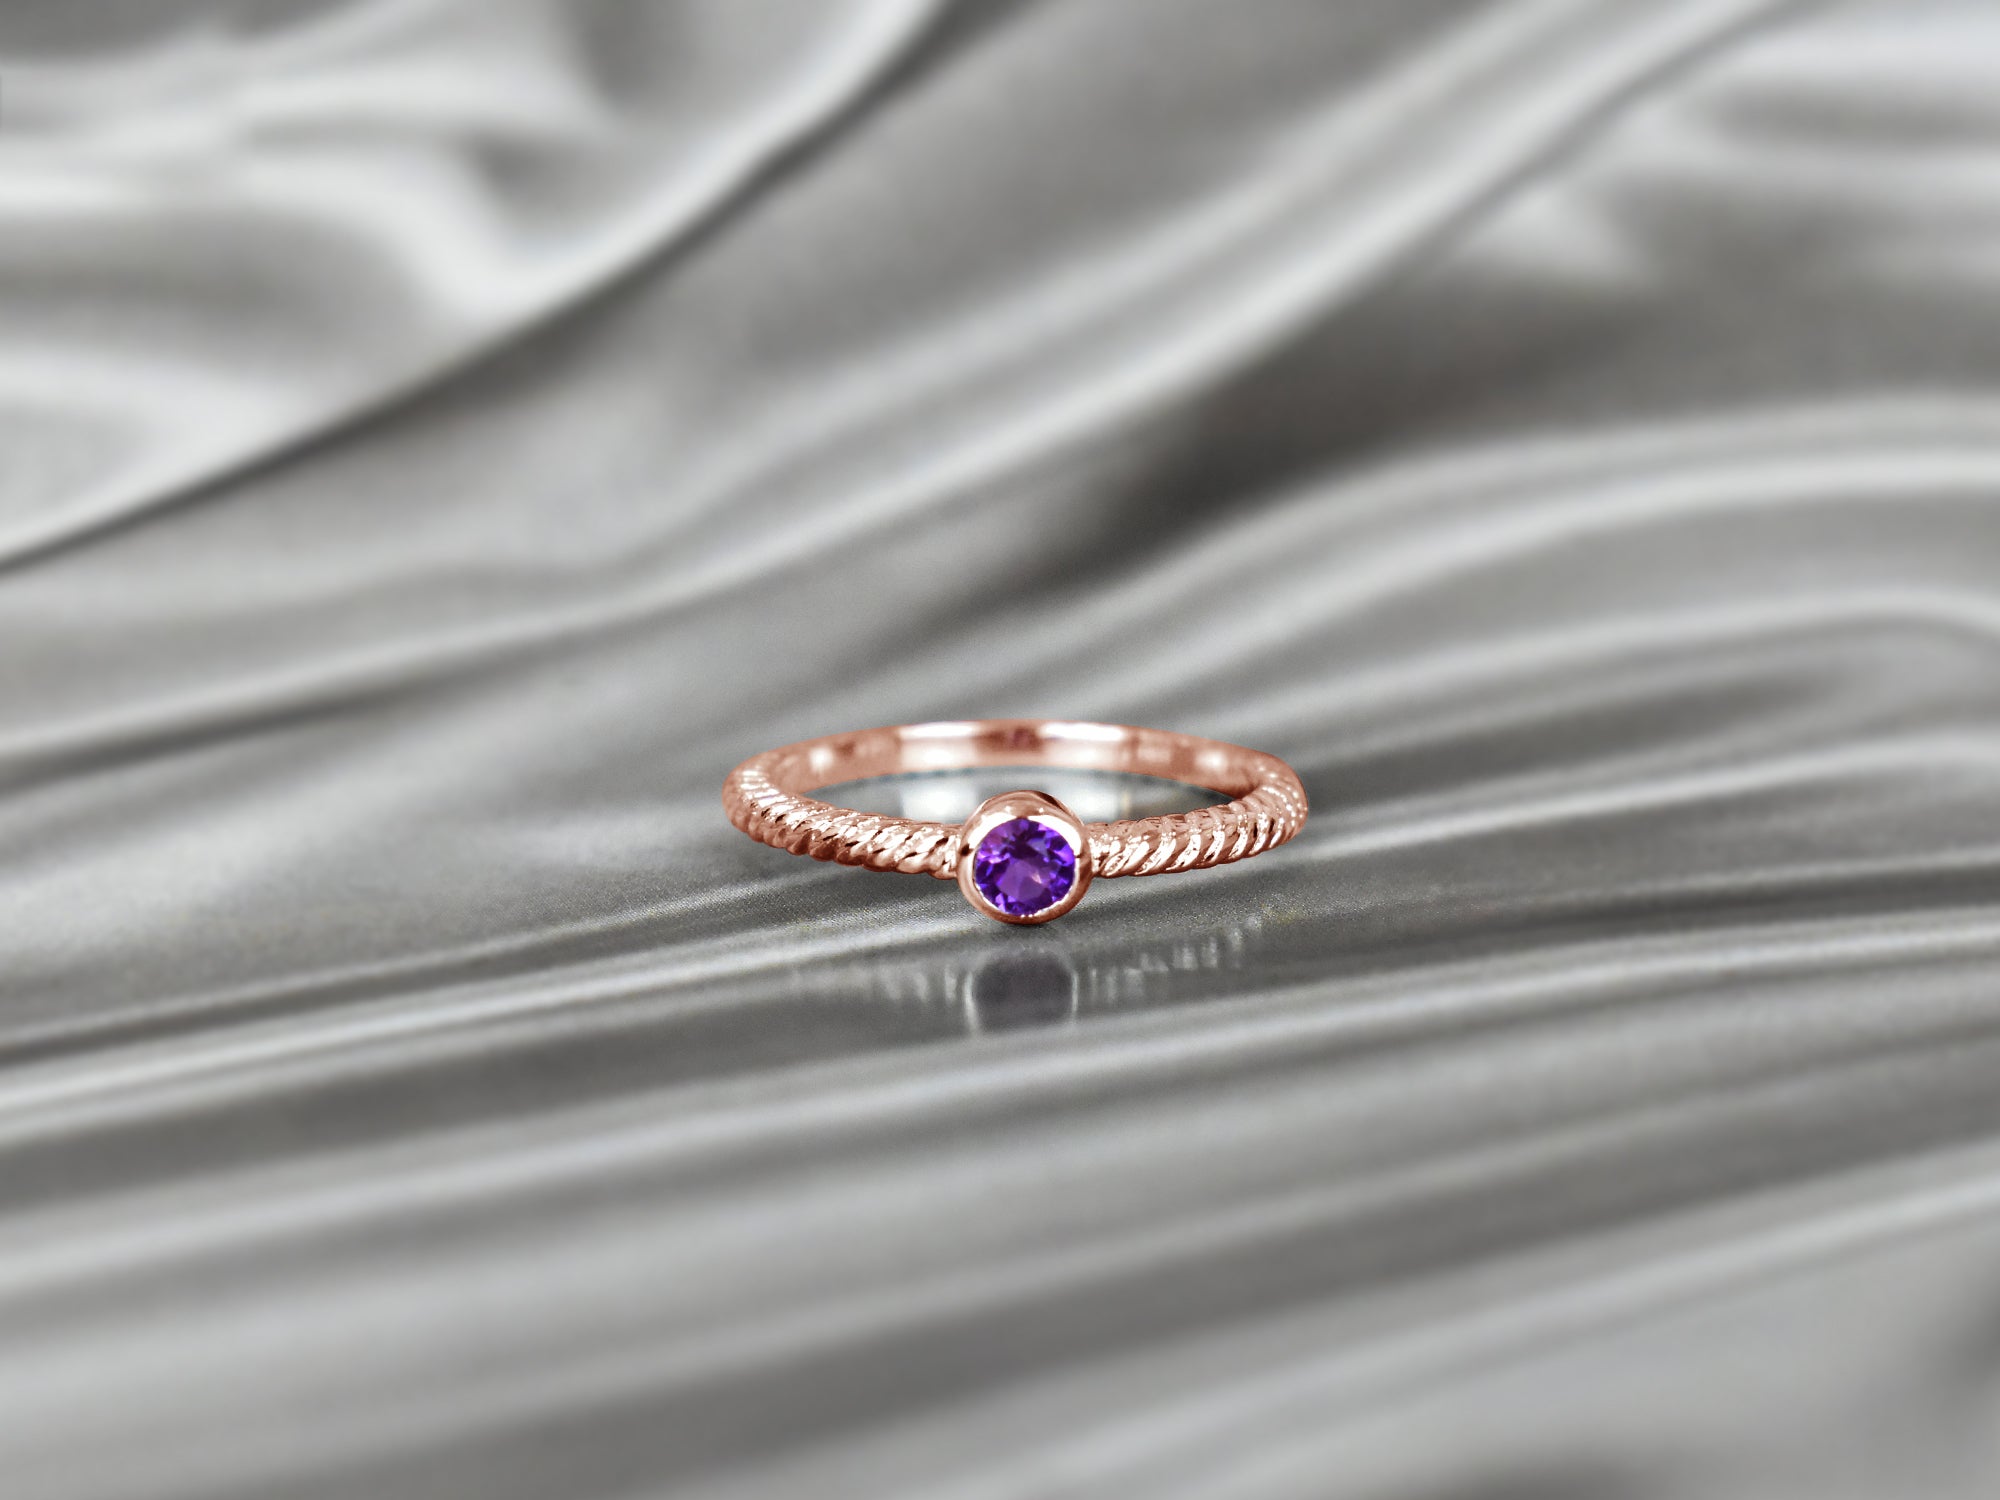 For Sale:  10k Gold Round Gemstone 3.5mm Round Gemstone Ring Birthstone Ring Stackable Ring 2